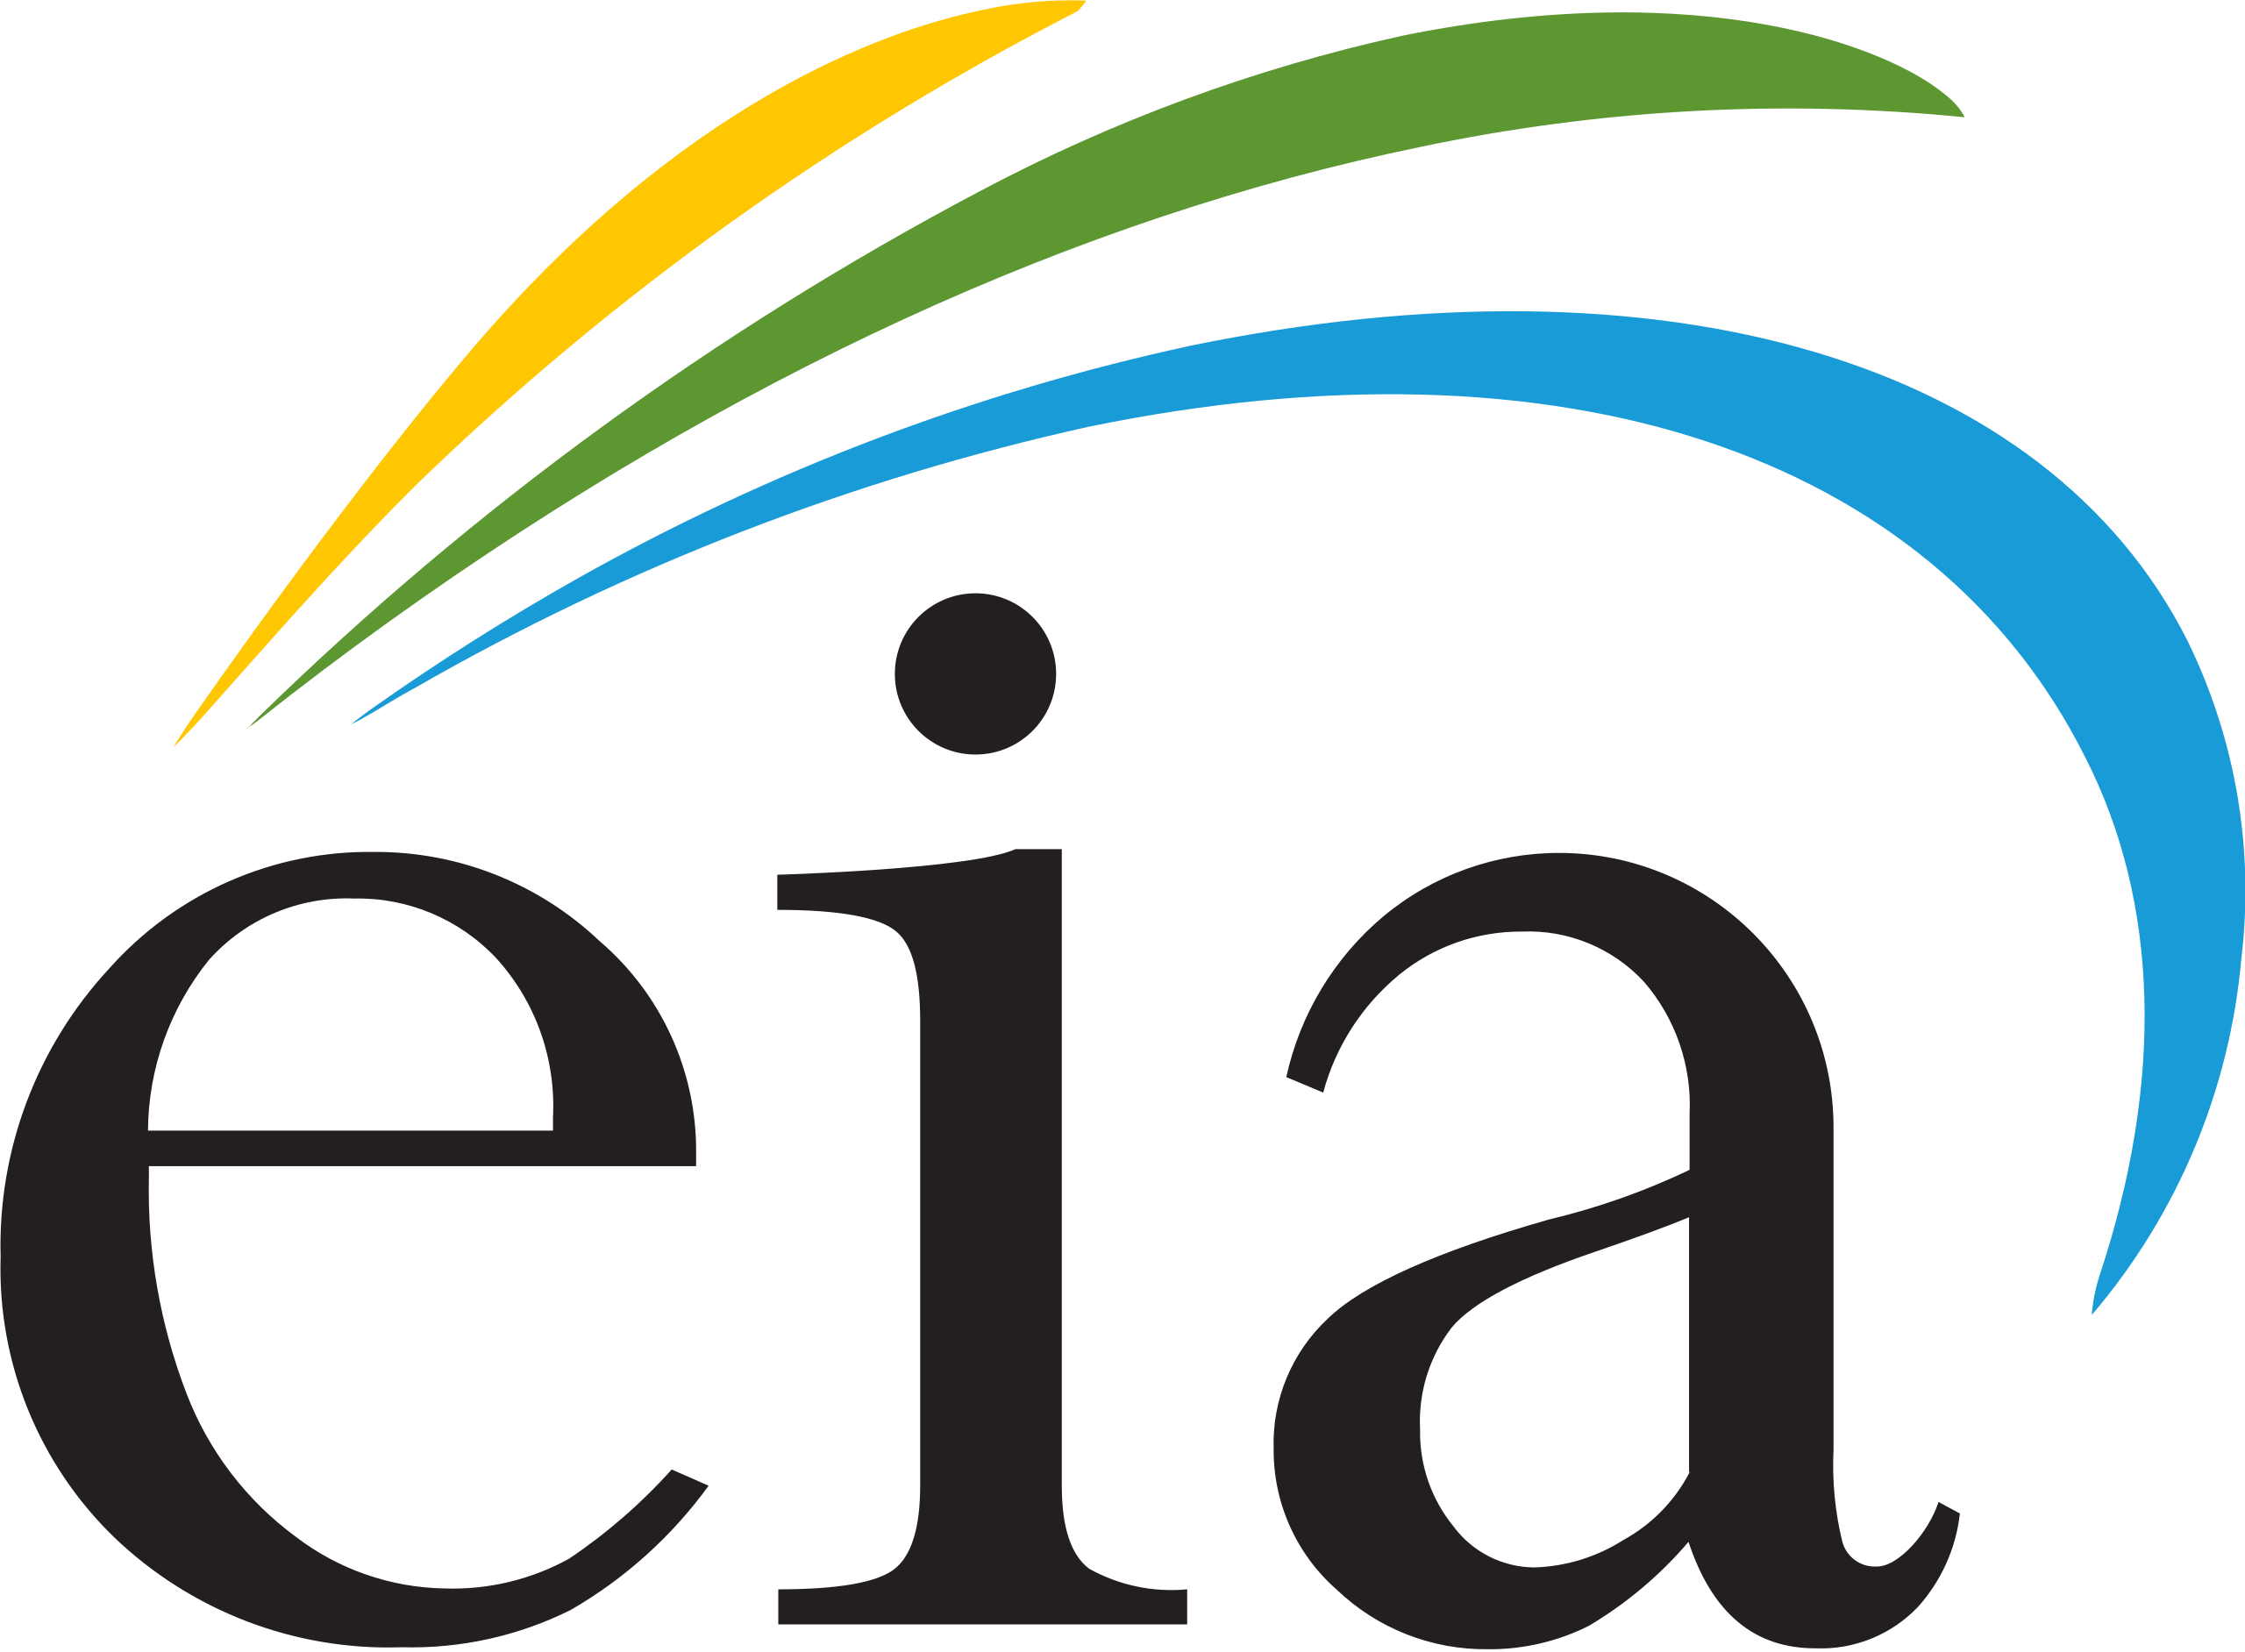 Energy Information Administration logo